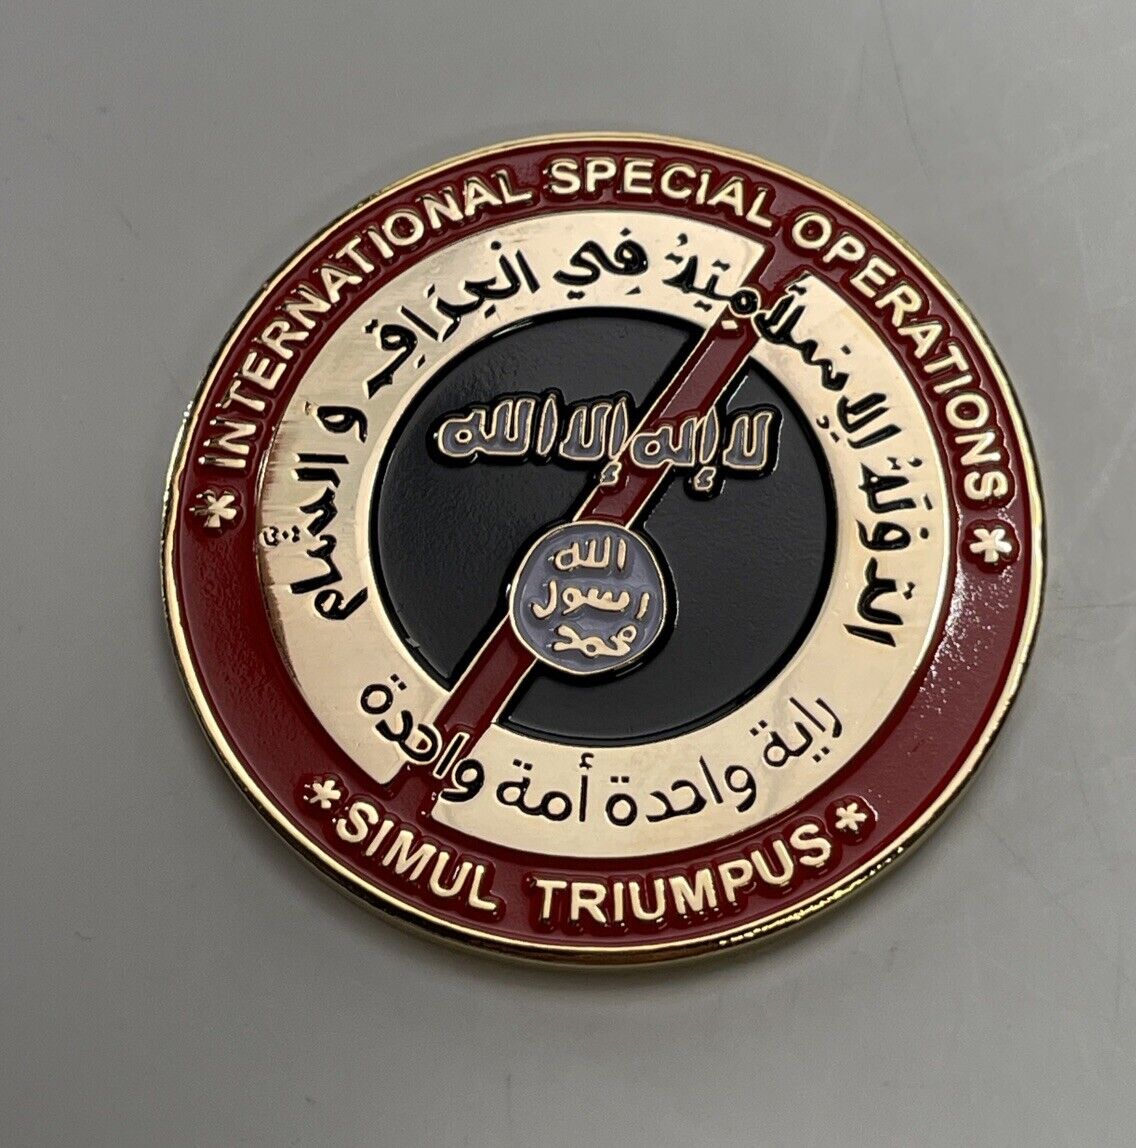 International Special Operations Simul Triumpus NSA CIA GCHQ SIS Challenge Coin